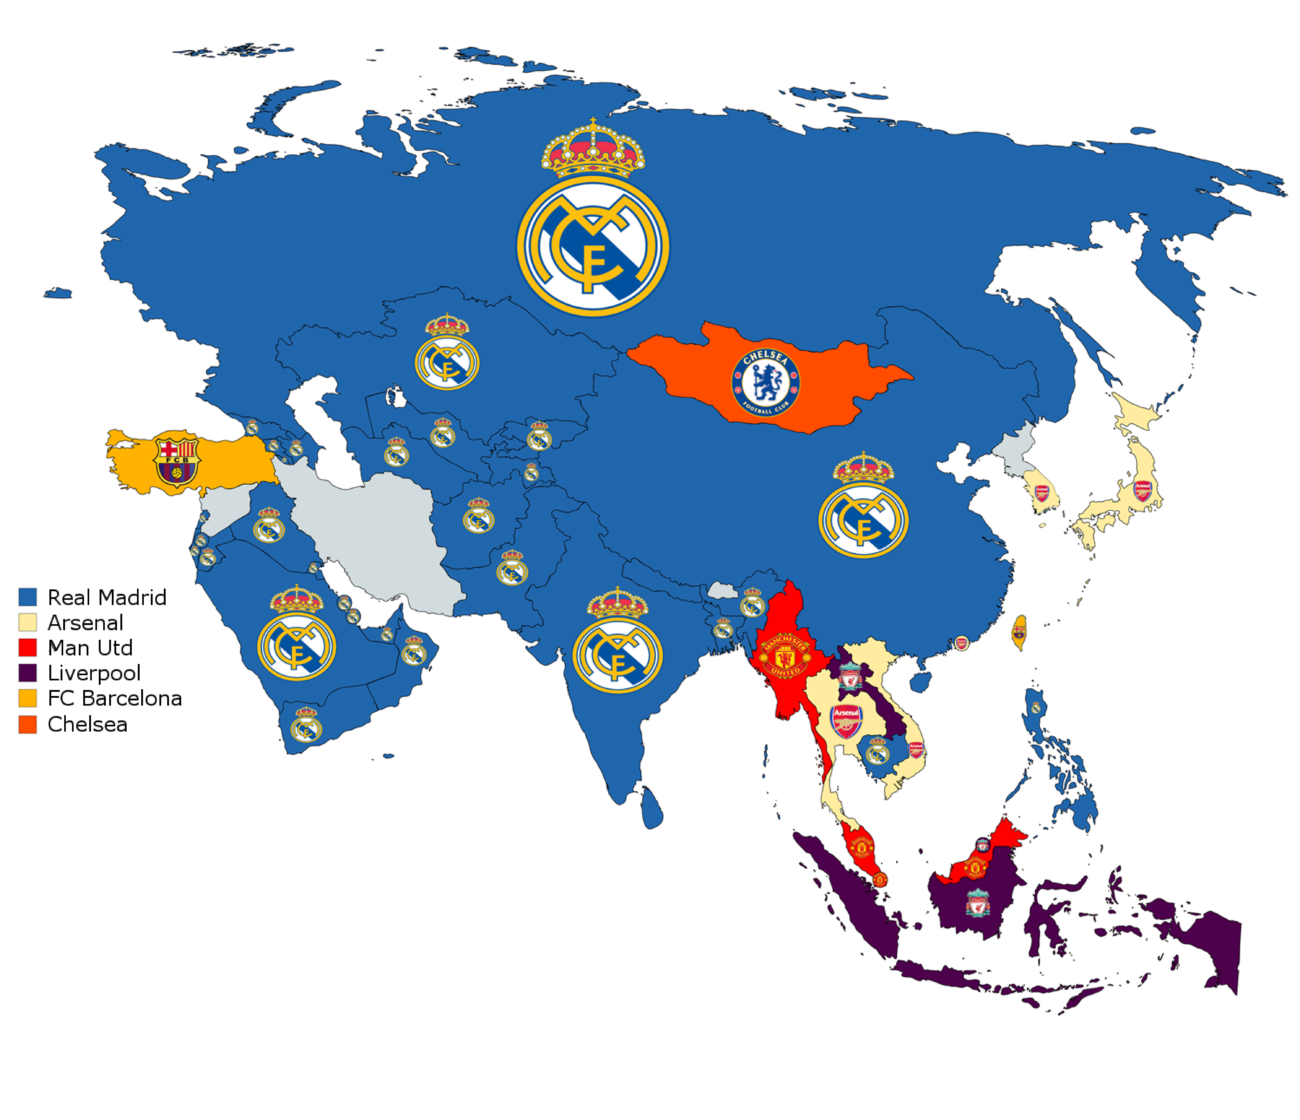 El Madrid manda tambin en Asia